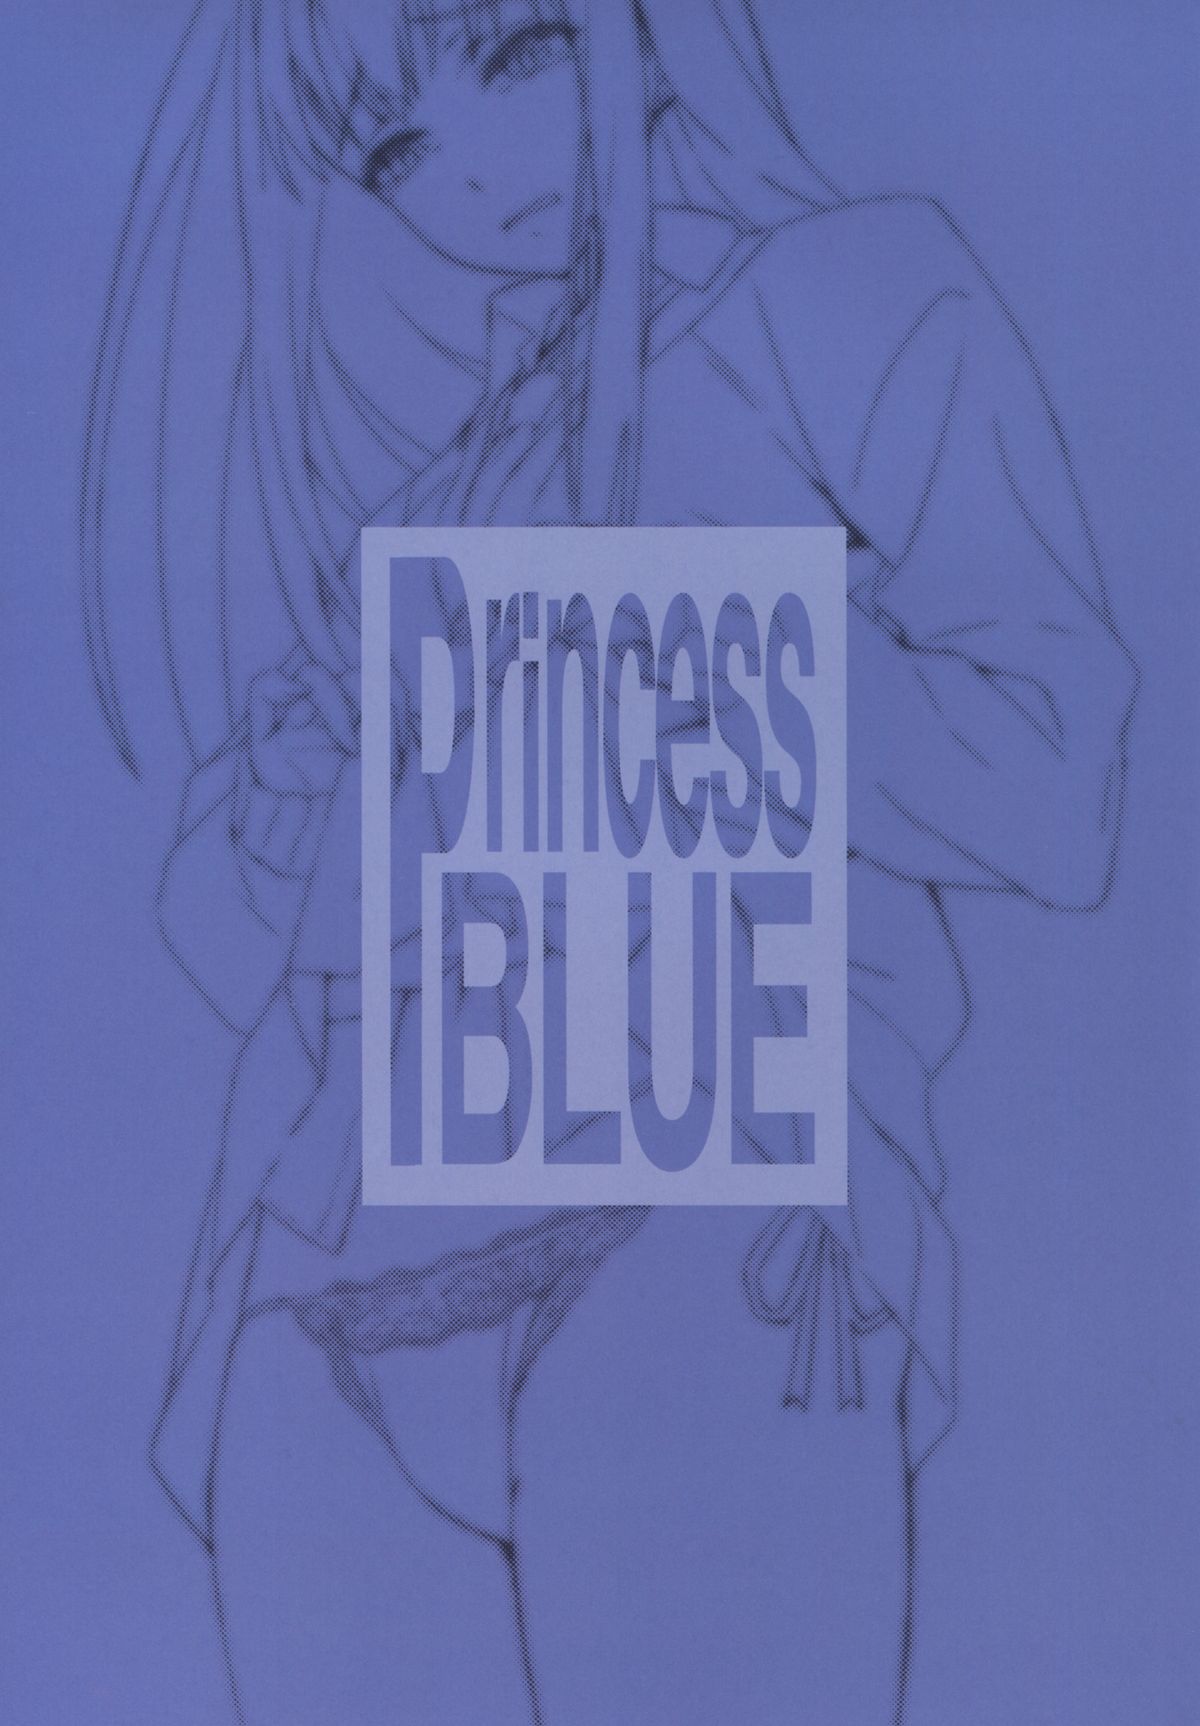 (C88) [alicemiller (松竜)] Princess blue (アイドルマスター シンデレラガールズ) [中国翻訳]